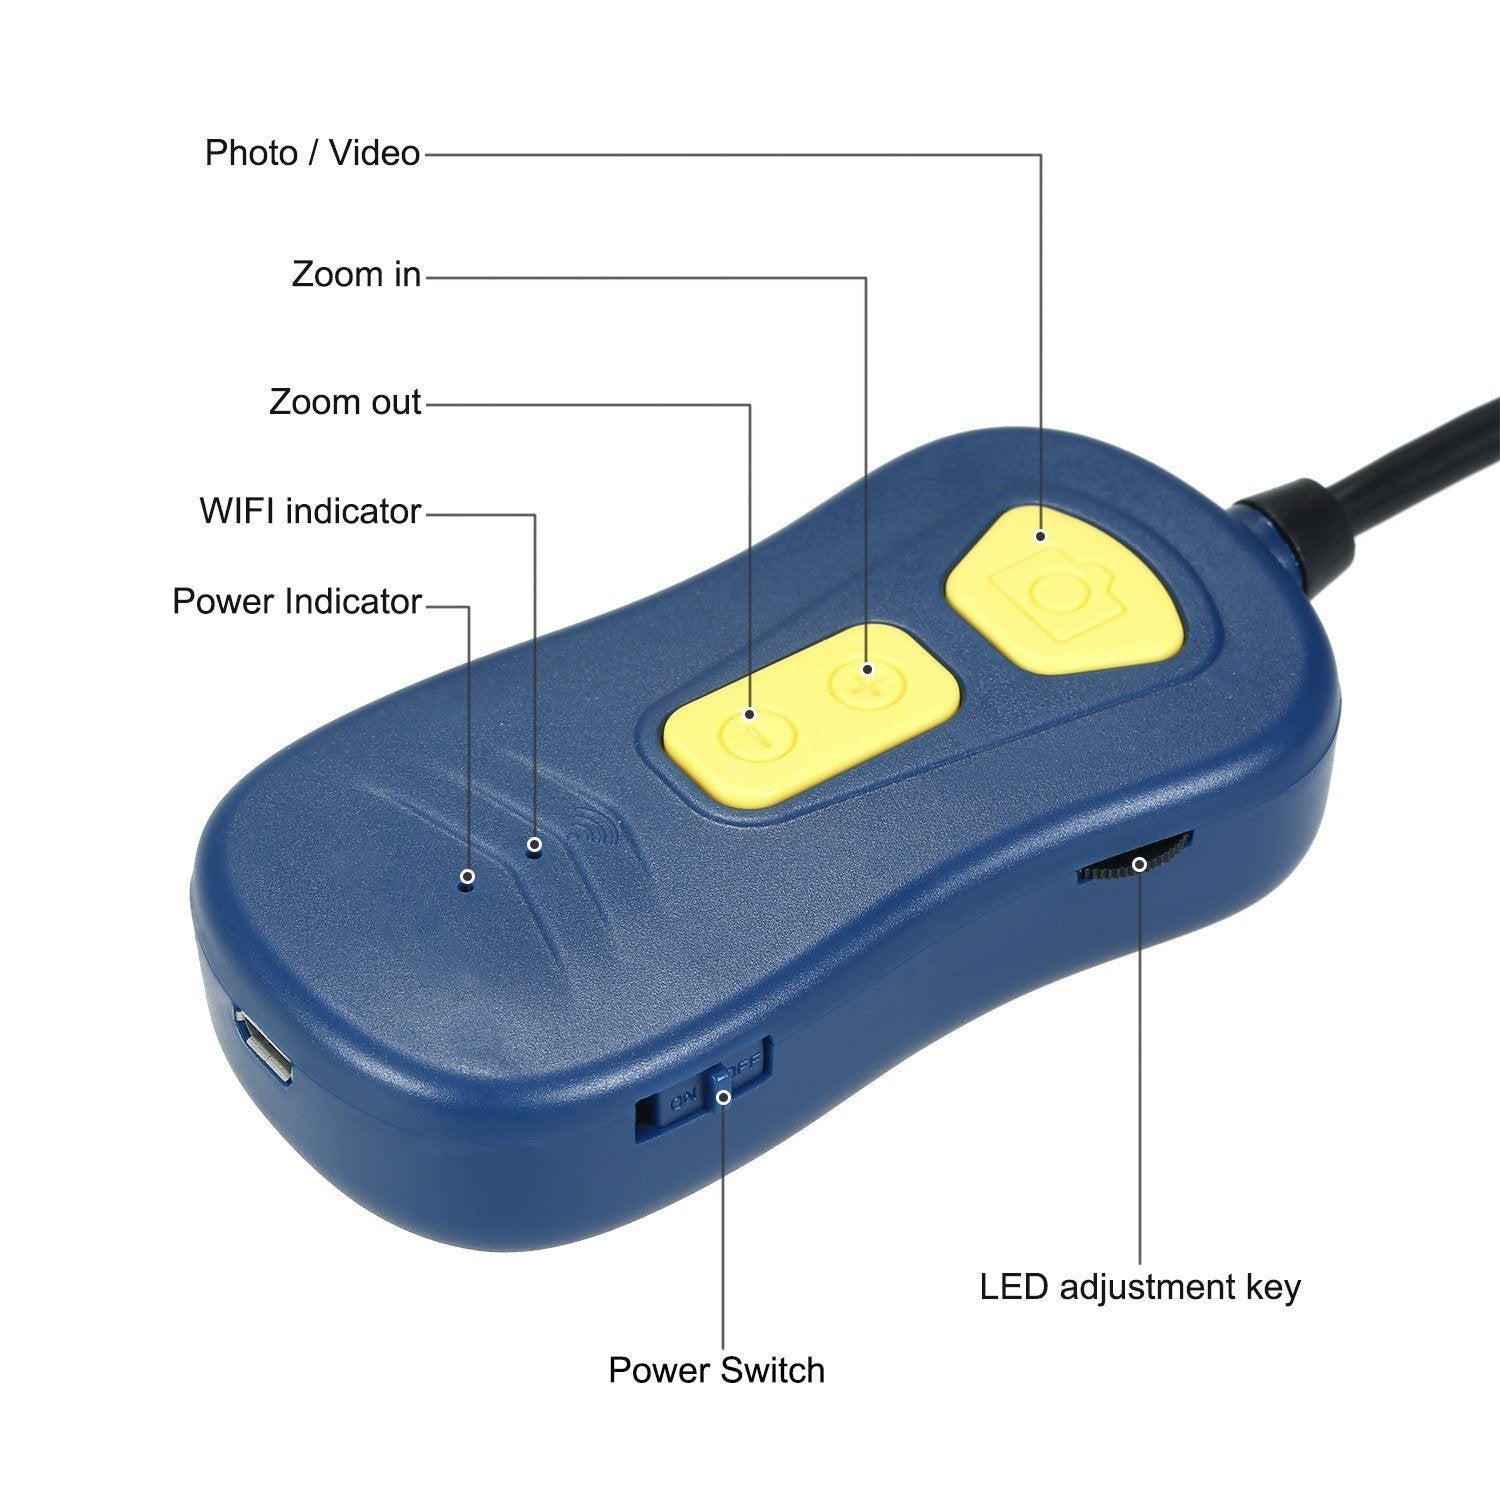 Wireless Endoscope WiFi Borescope Snake Camera IP67 Waterproof HD Inspection with 6 LED Lights